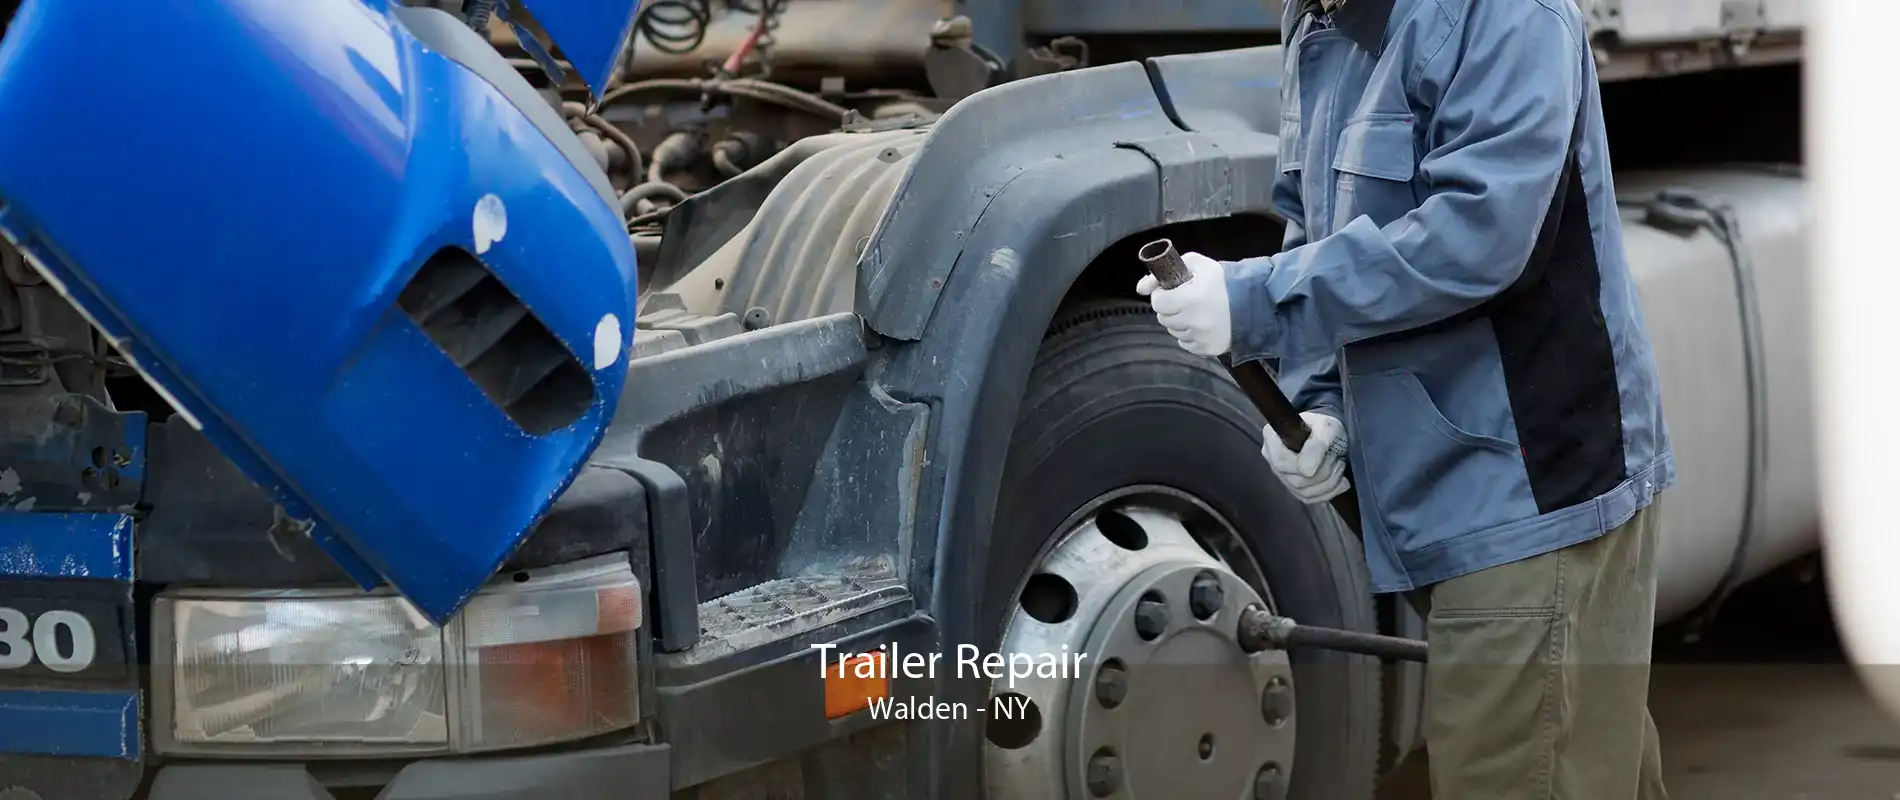 Trailer Repair Walden - NY